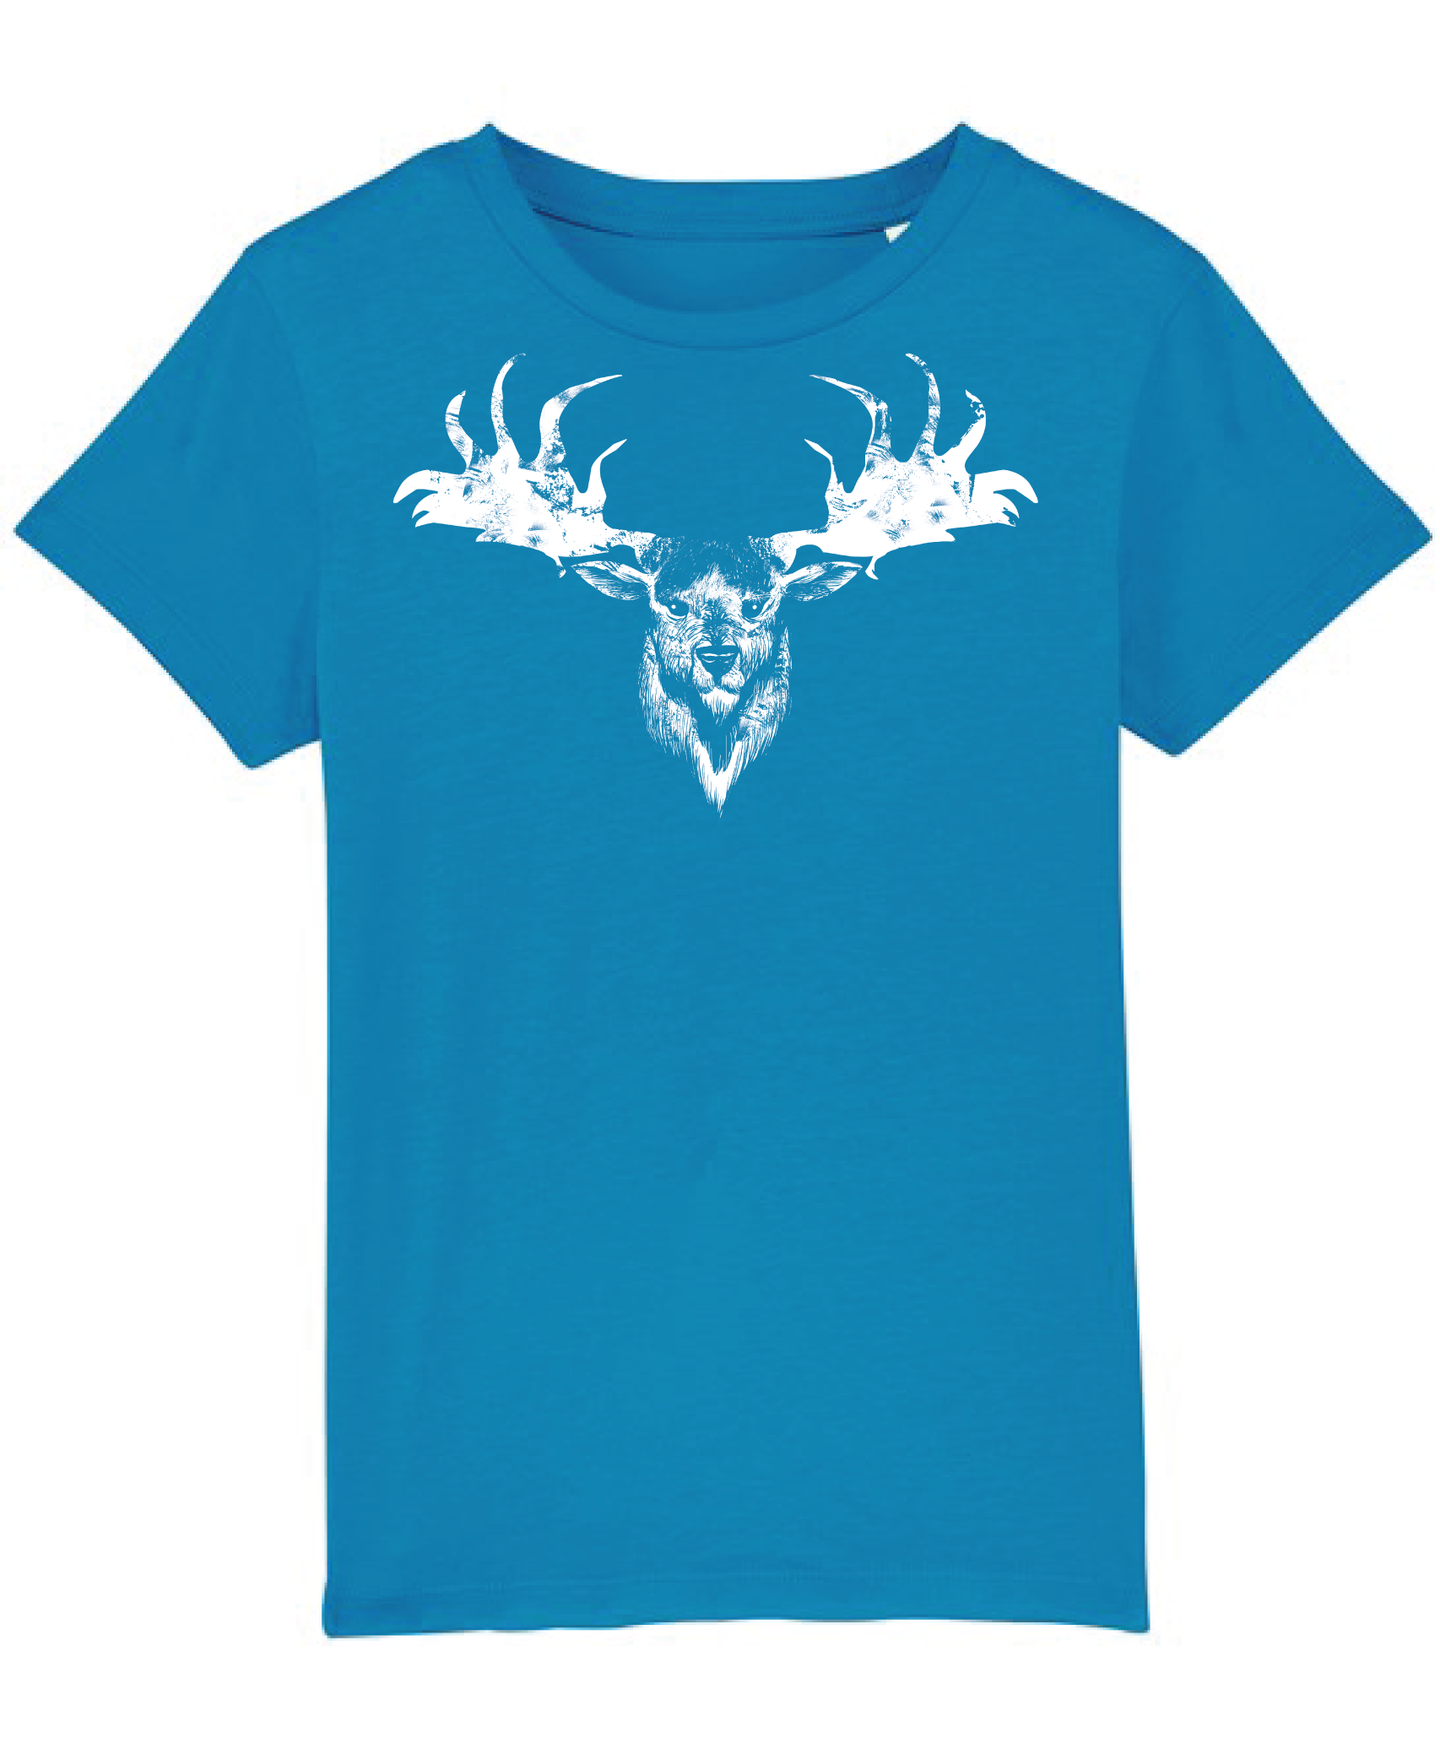 Boys New Azure Organic tee shirt with Elk print.